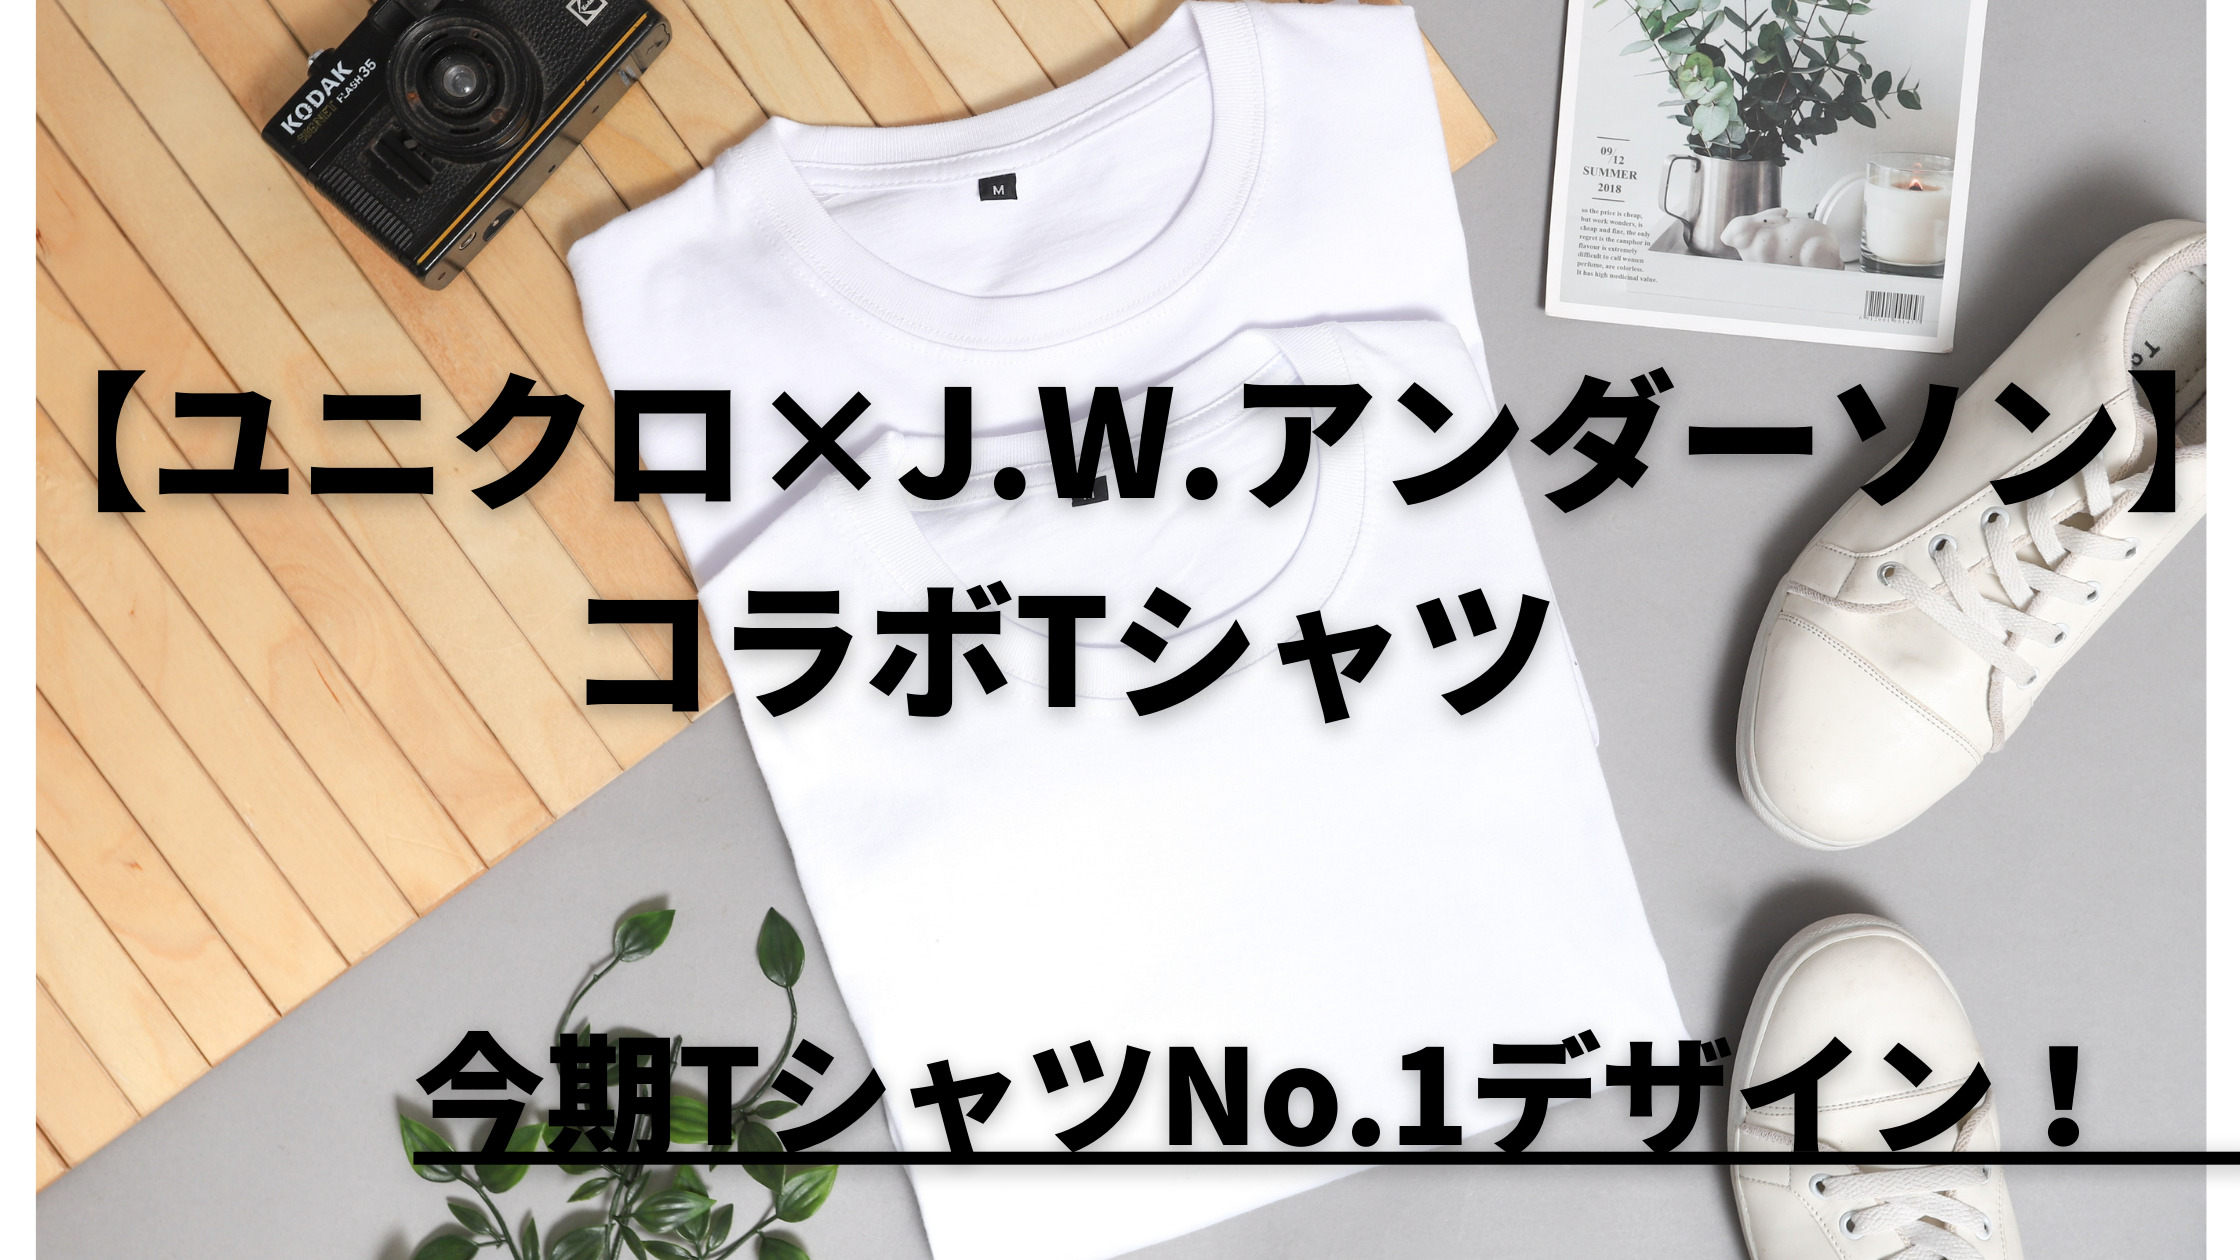 jw anderson 今期人気完売Tシャツ